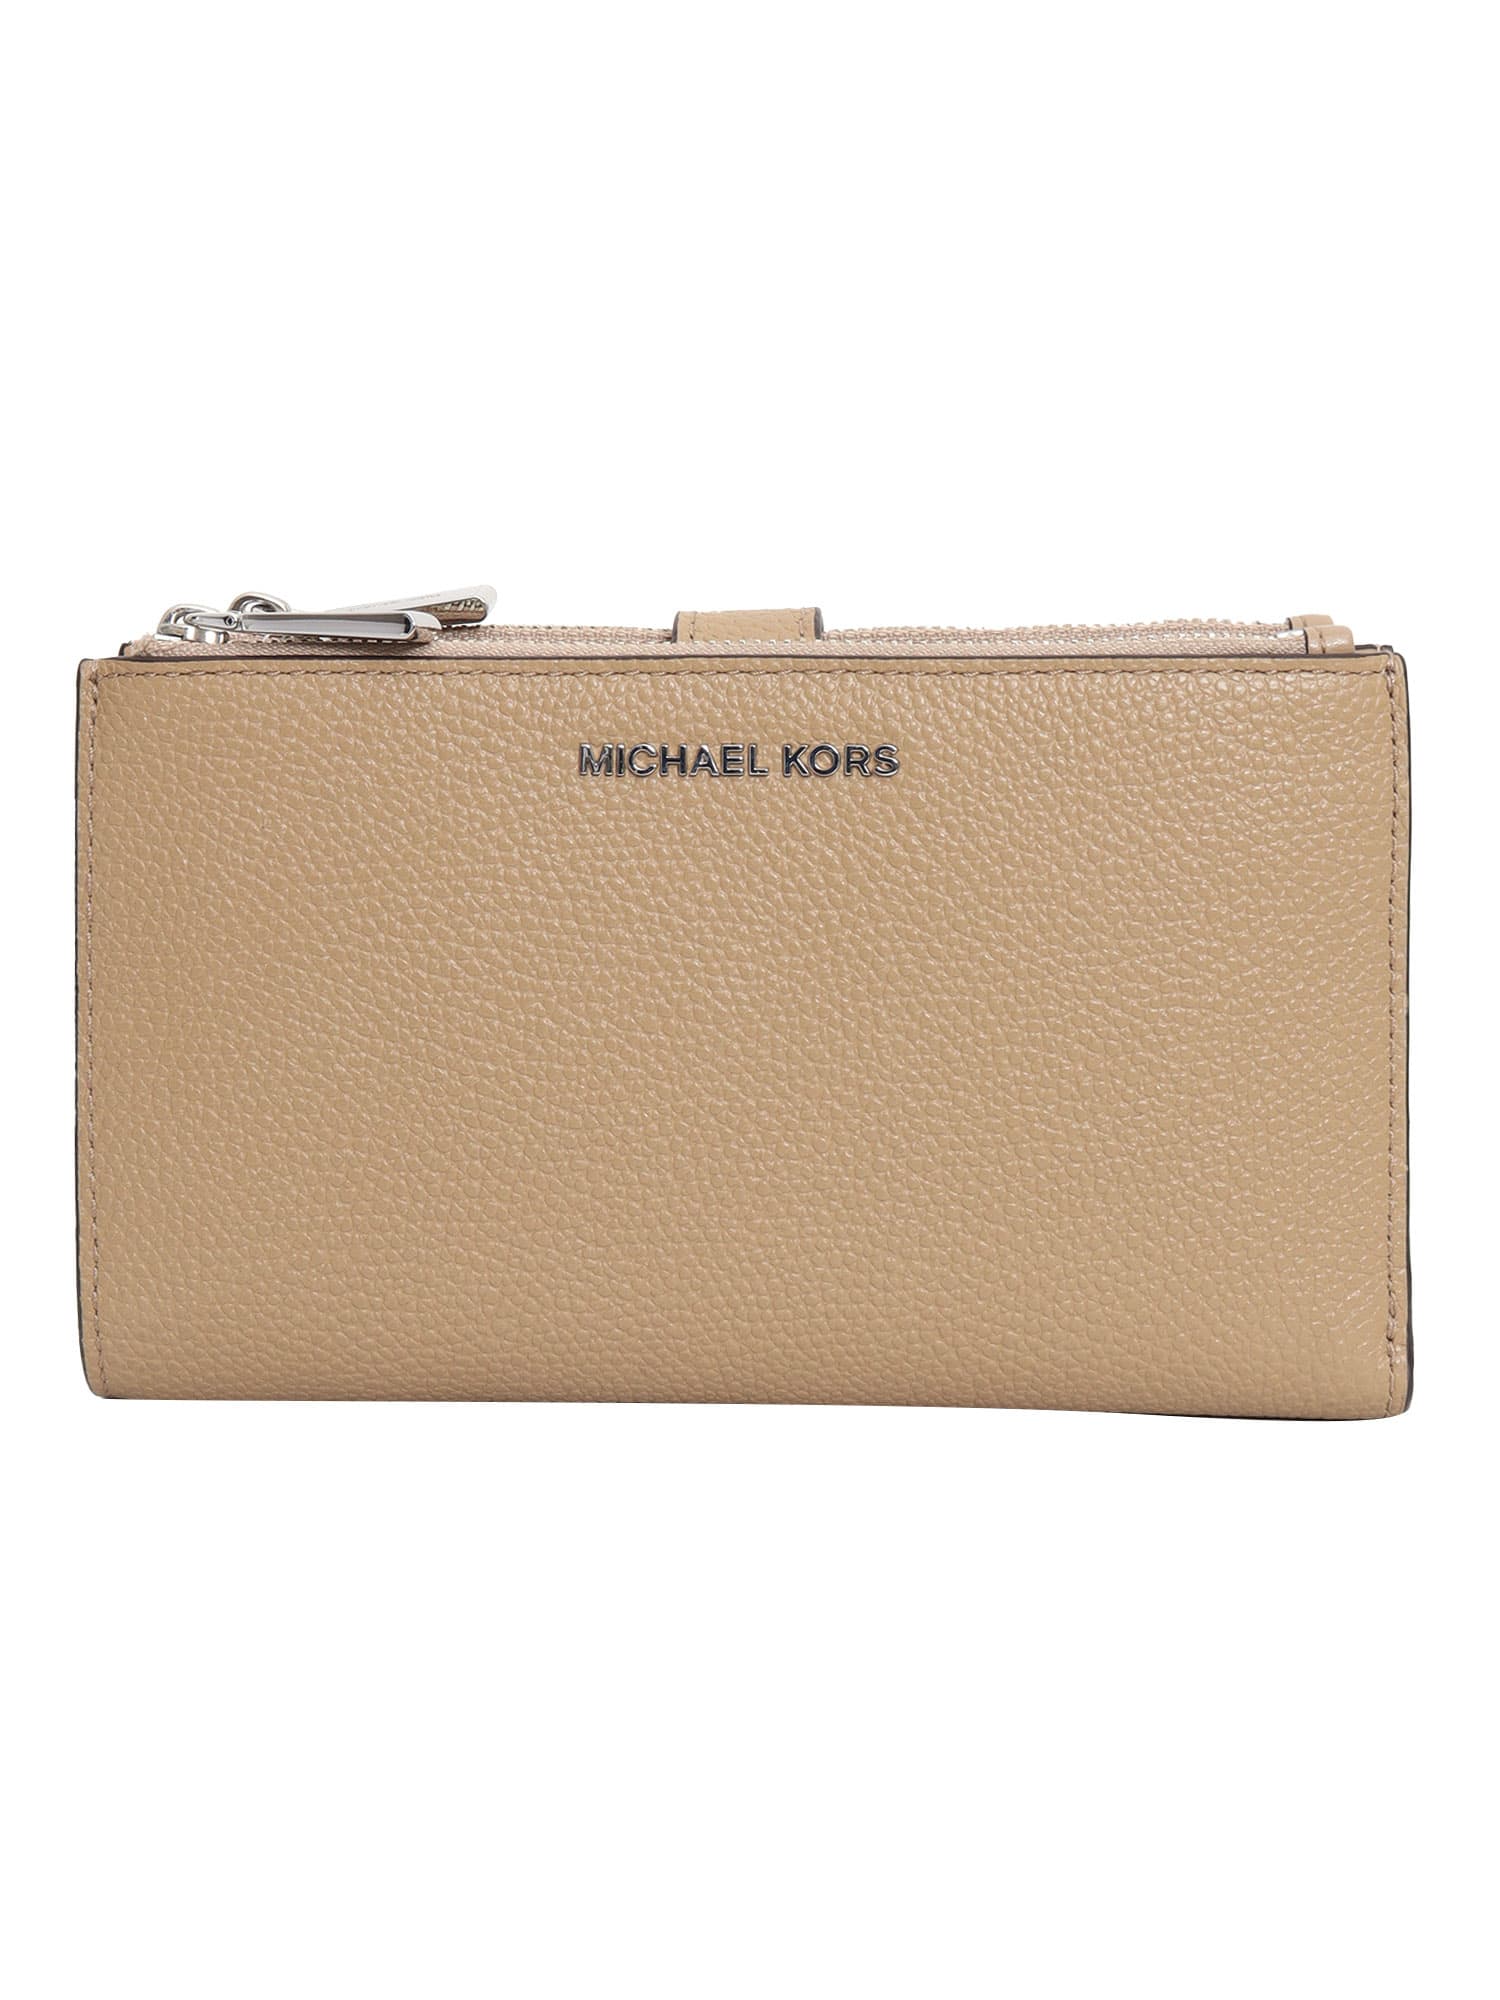 Michael Kors Adele Smartphone Wallet